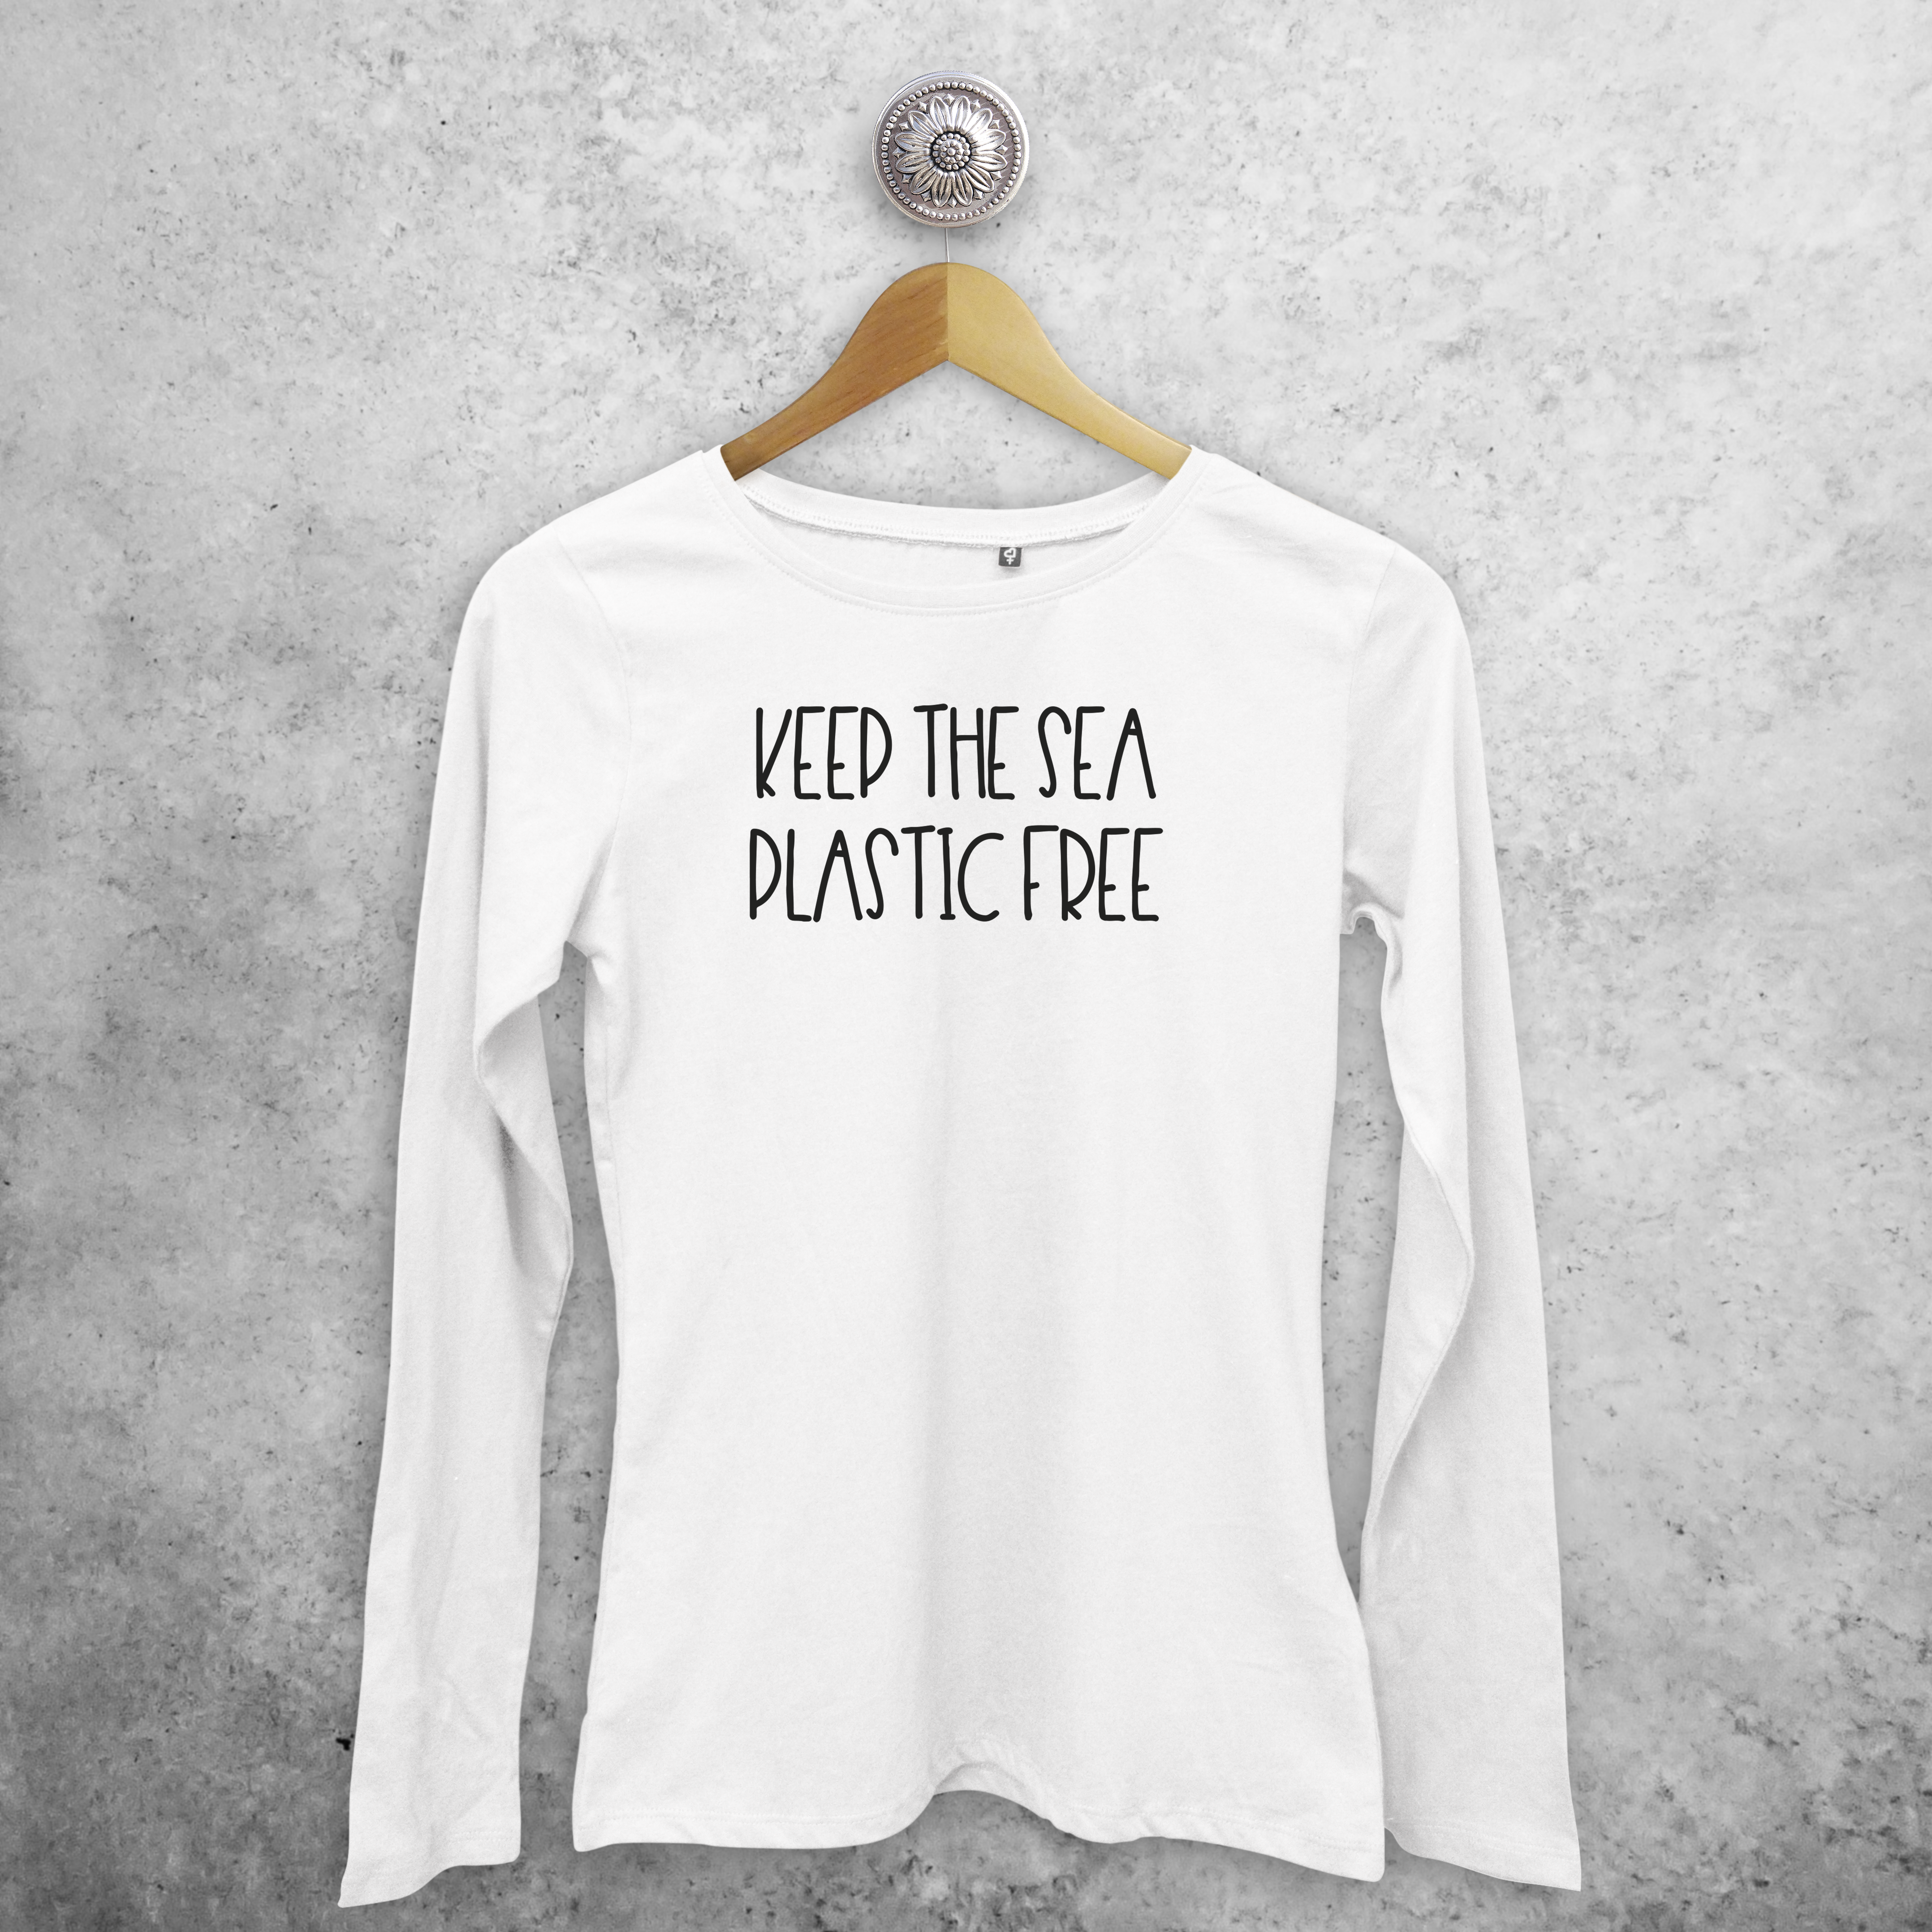 'Keep the sea plastic free' adult longsleeve shirt